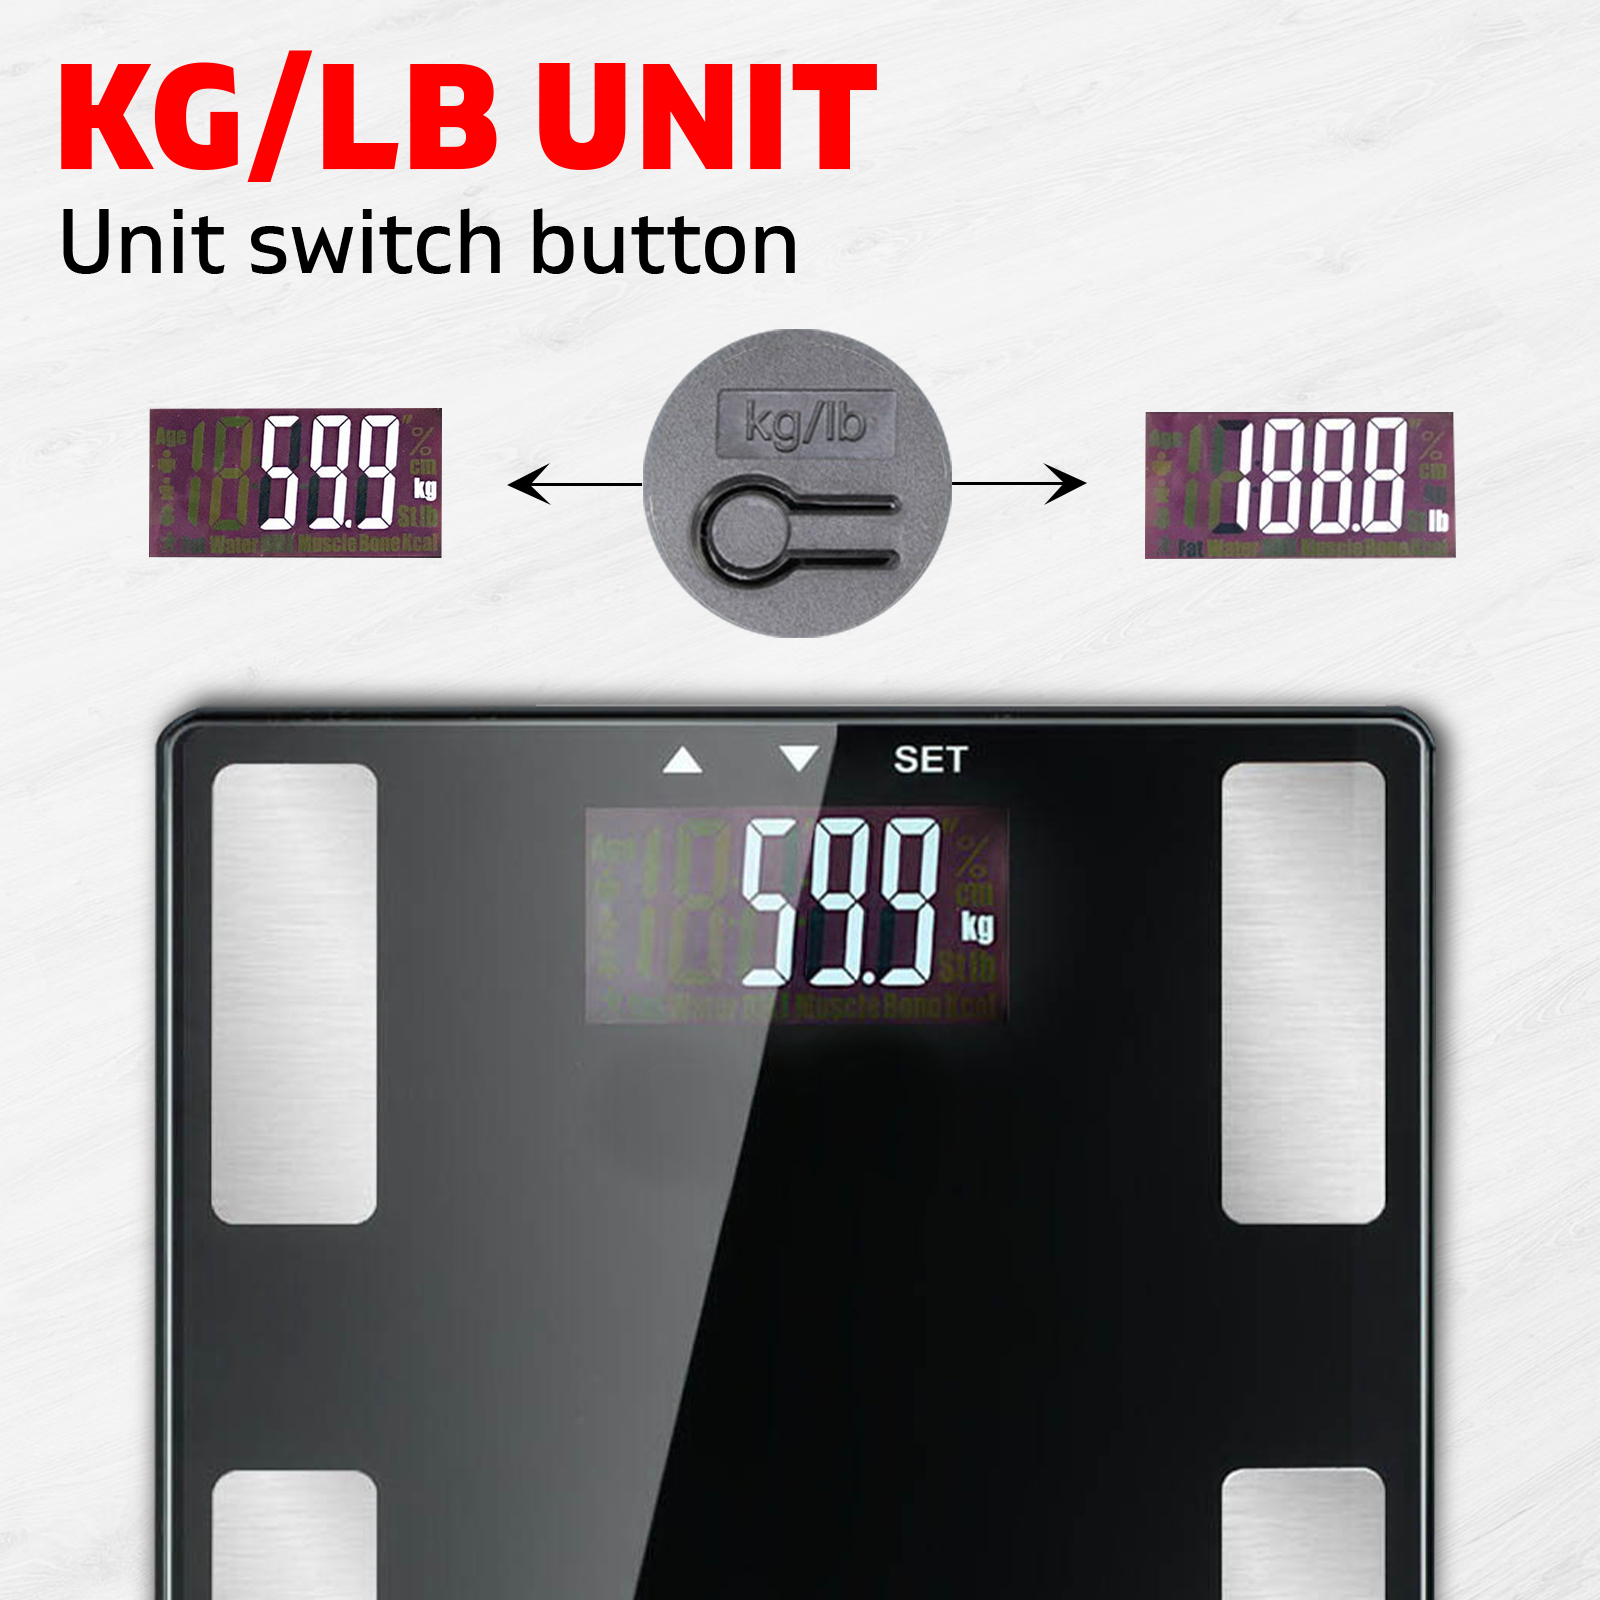 Digital Body Fat Scale Bathroom Weight Tracker Electronic Ultra Slim - Black